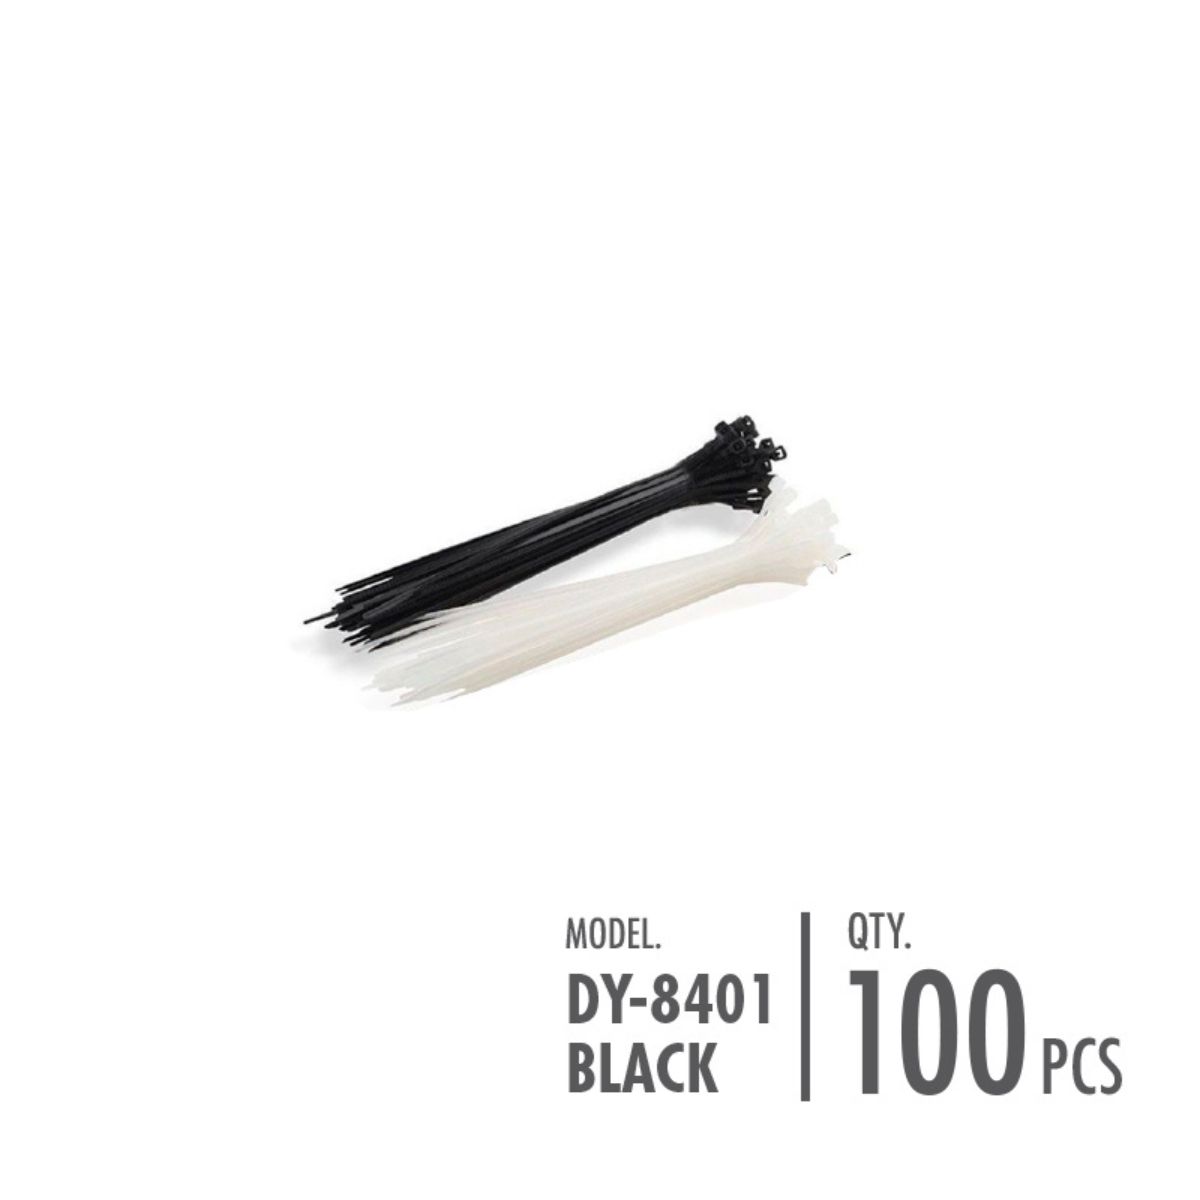 Cable Tie - Black (Dim: 0.3 x 10cm)